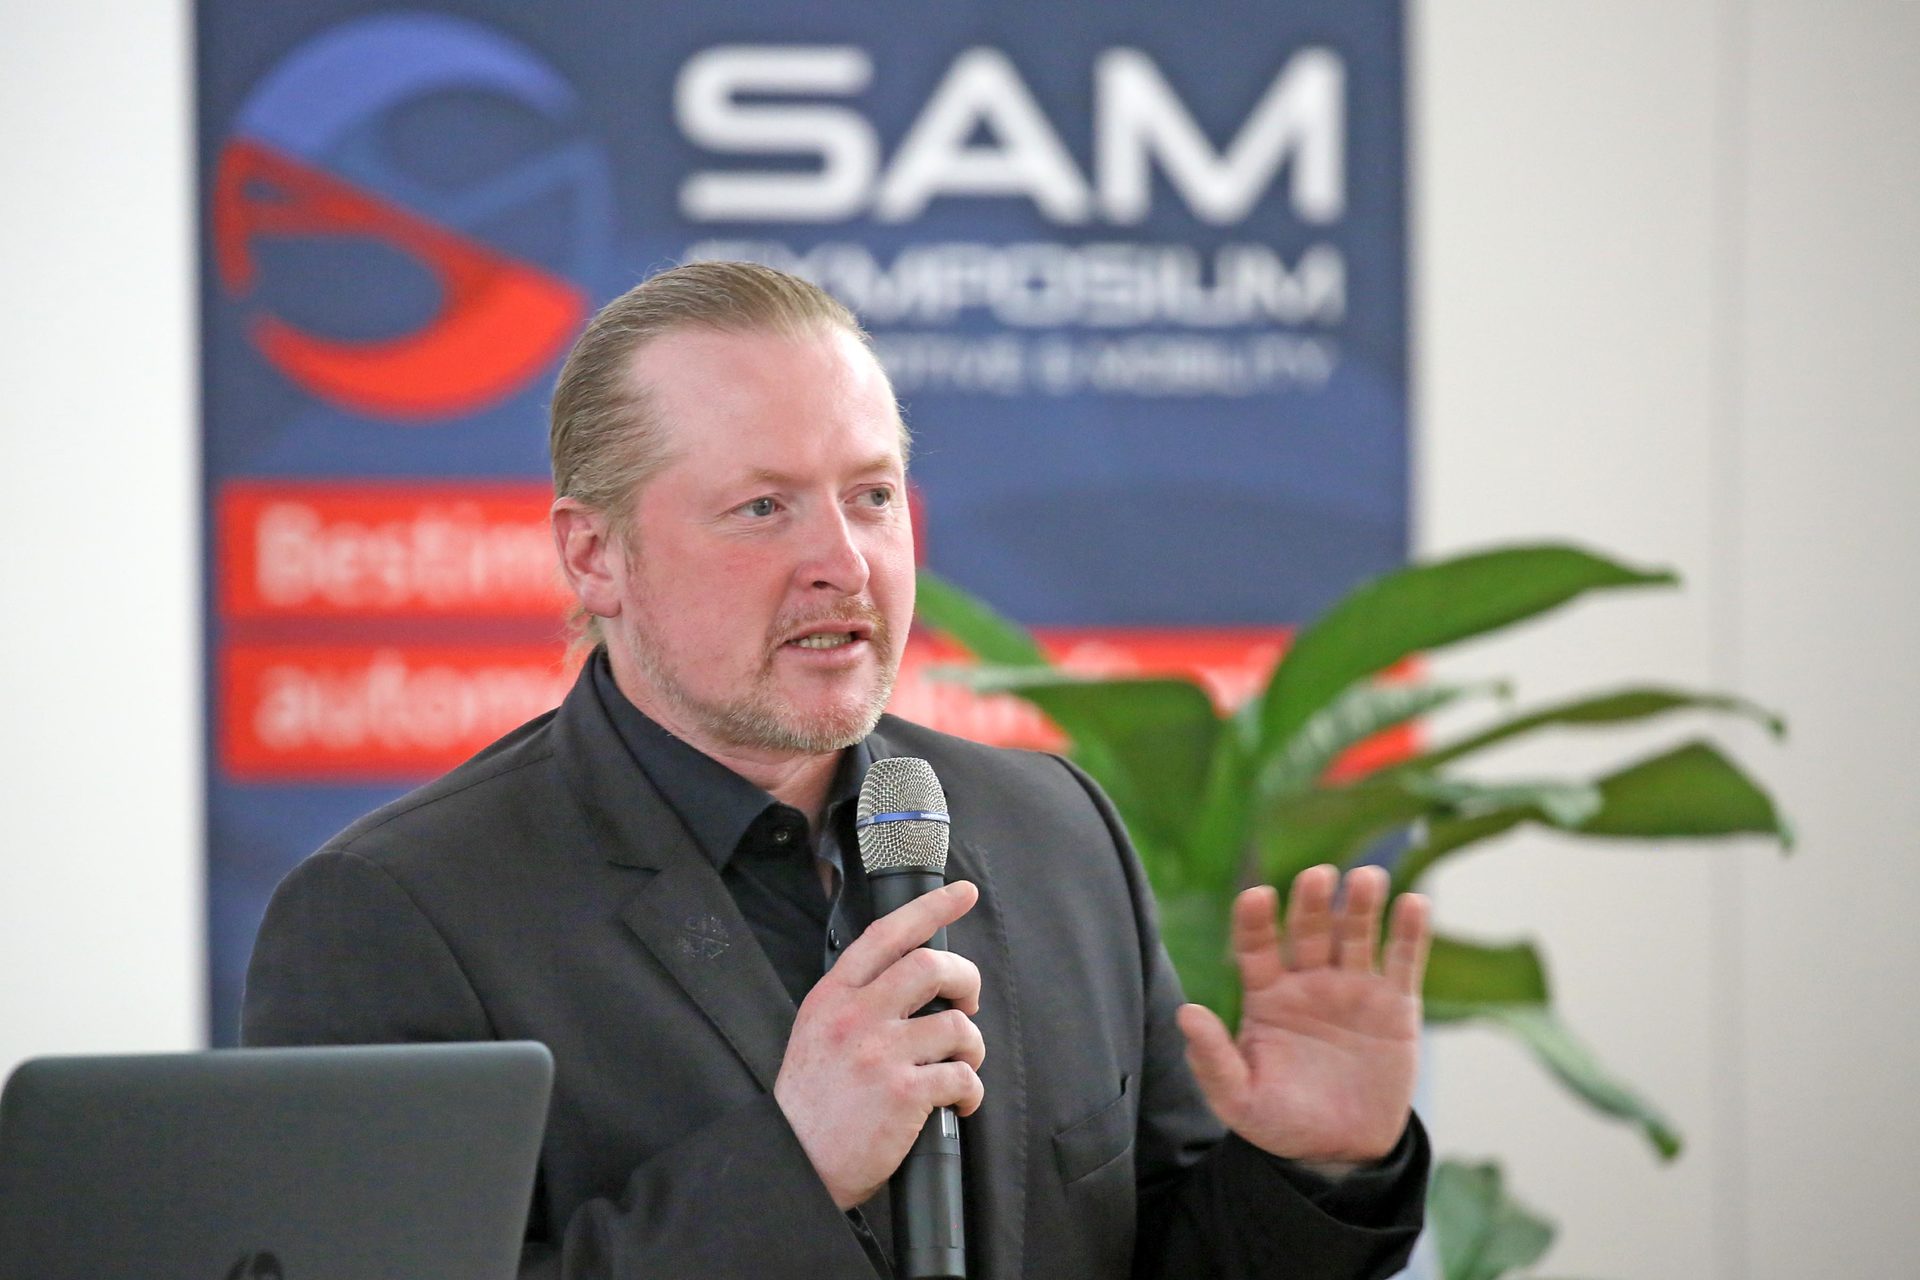 Foto: Joey Kelly spricht in ein Mikrofon zum 3. Symposium Automotive & Mobility (SAM)